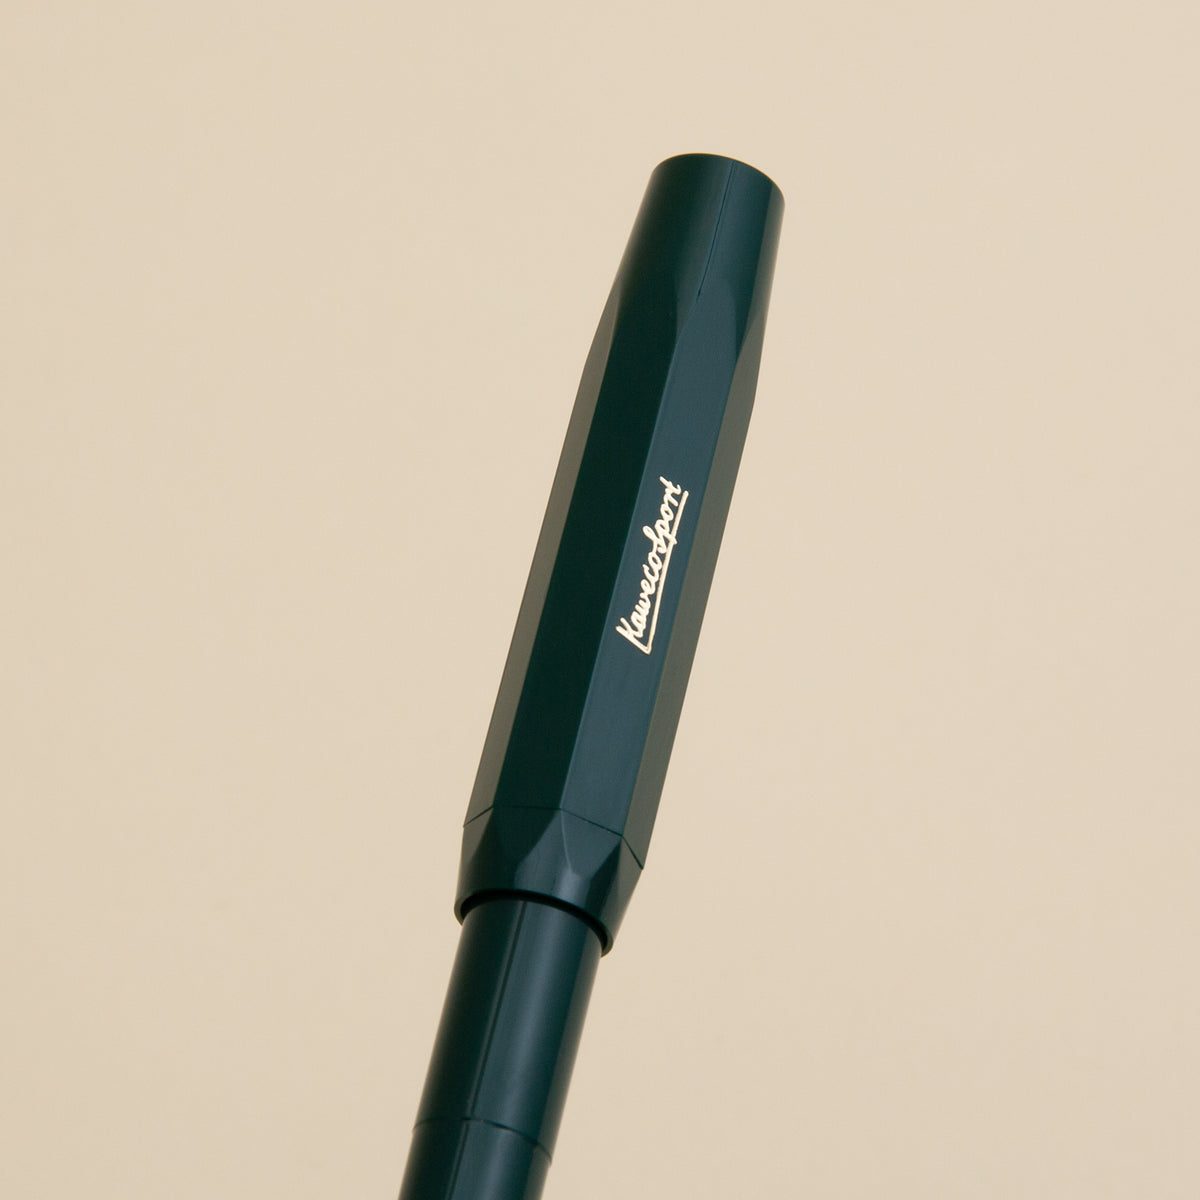 Kaweco Sport Ballpoint Pen - Aluminum – The Good Liver